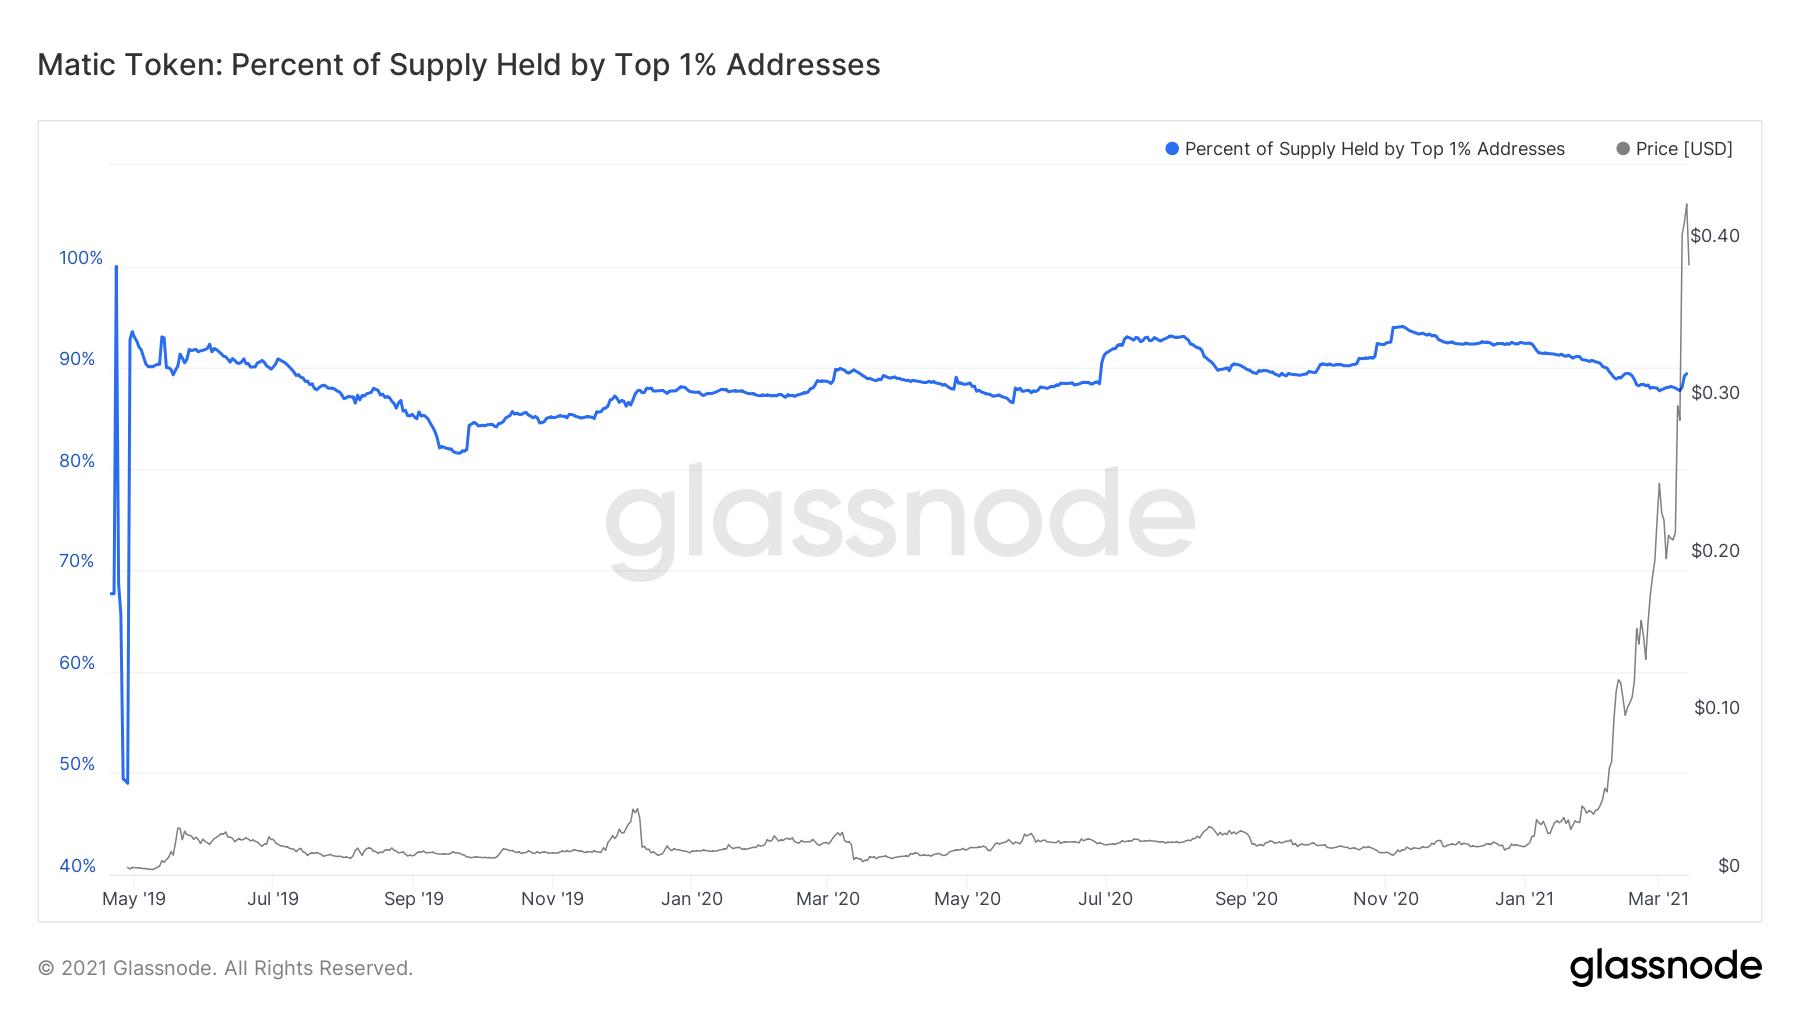 glassnode-studio_matic-token-percent-of-supply-held-by-top-1-addresses.png